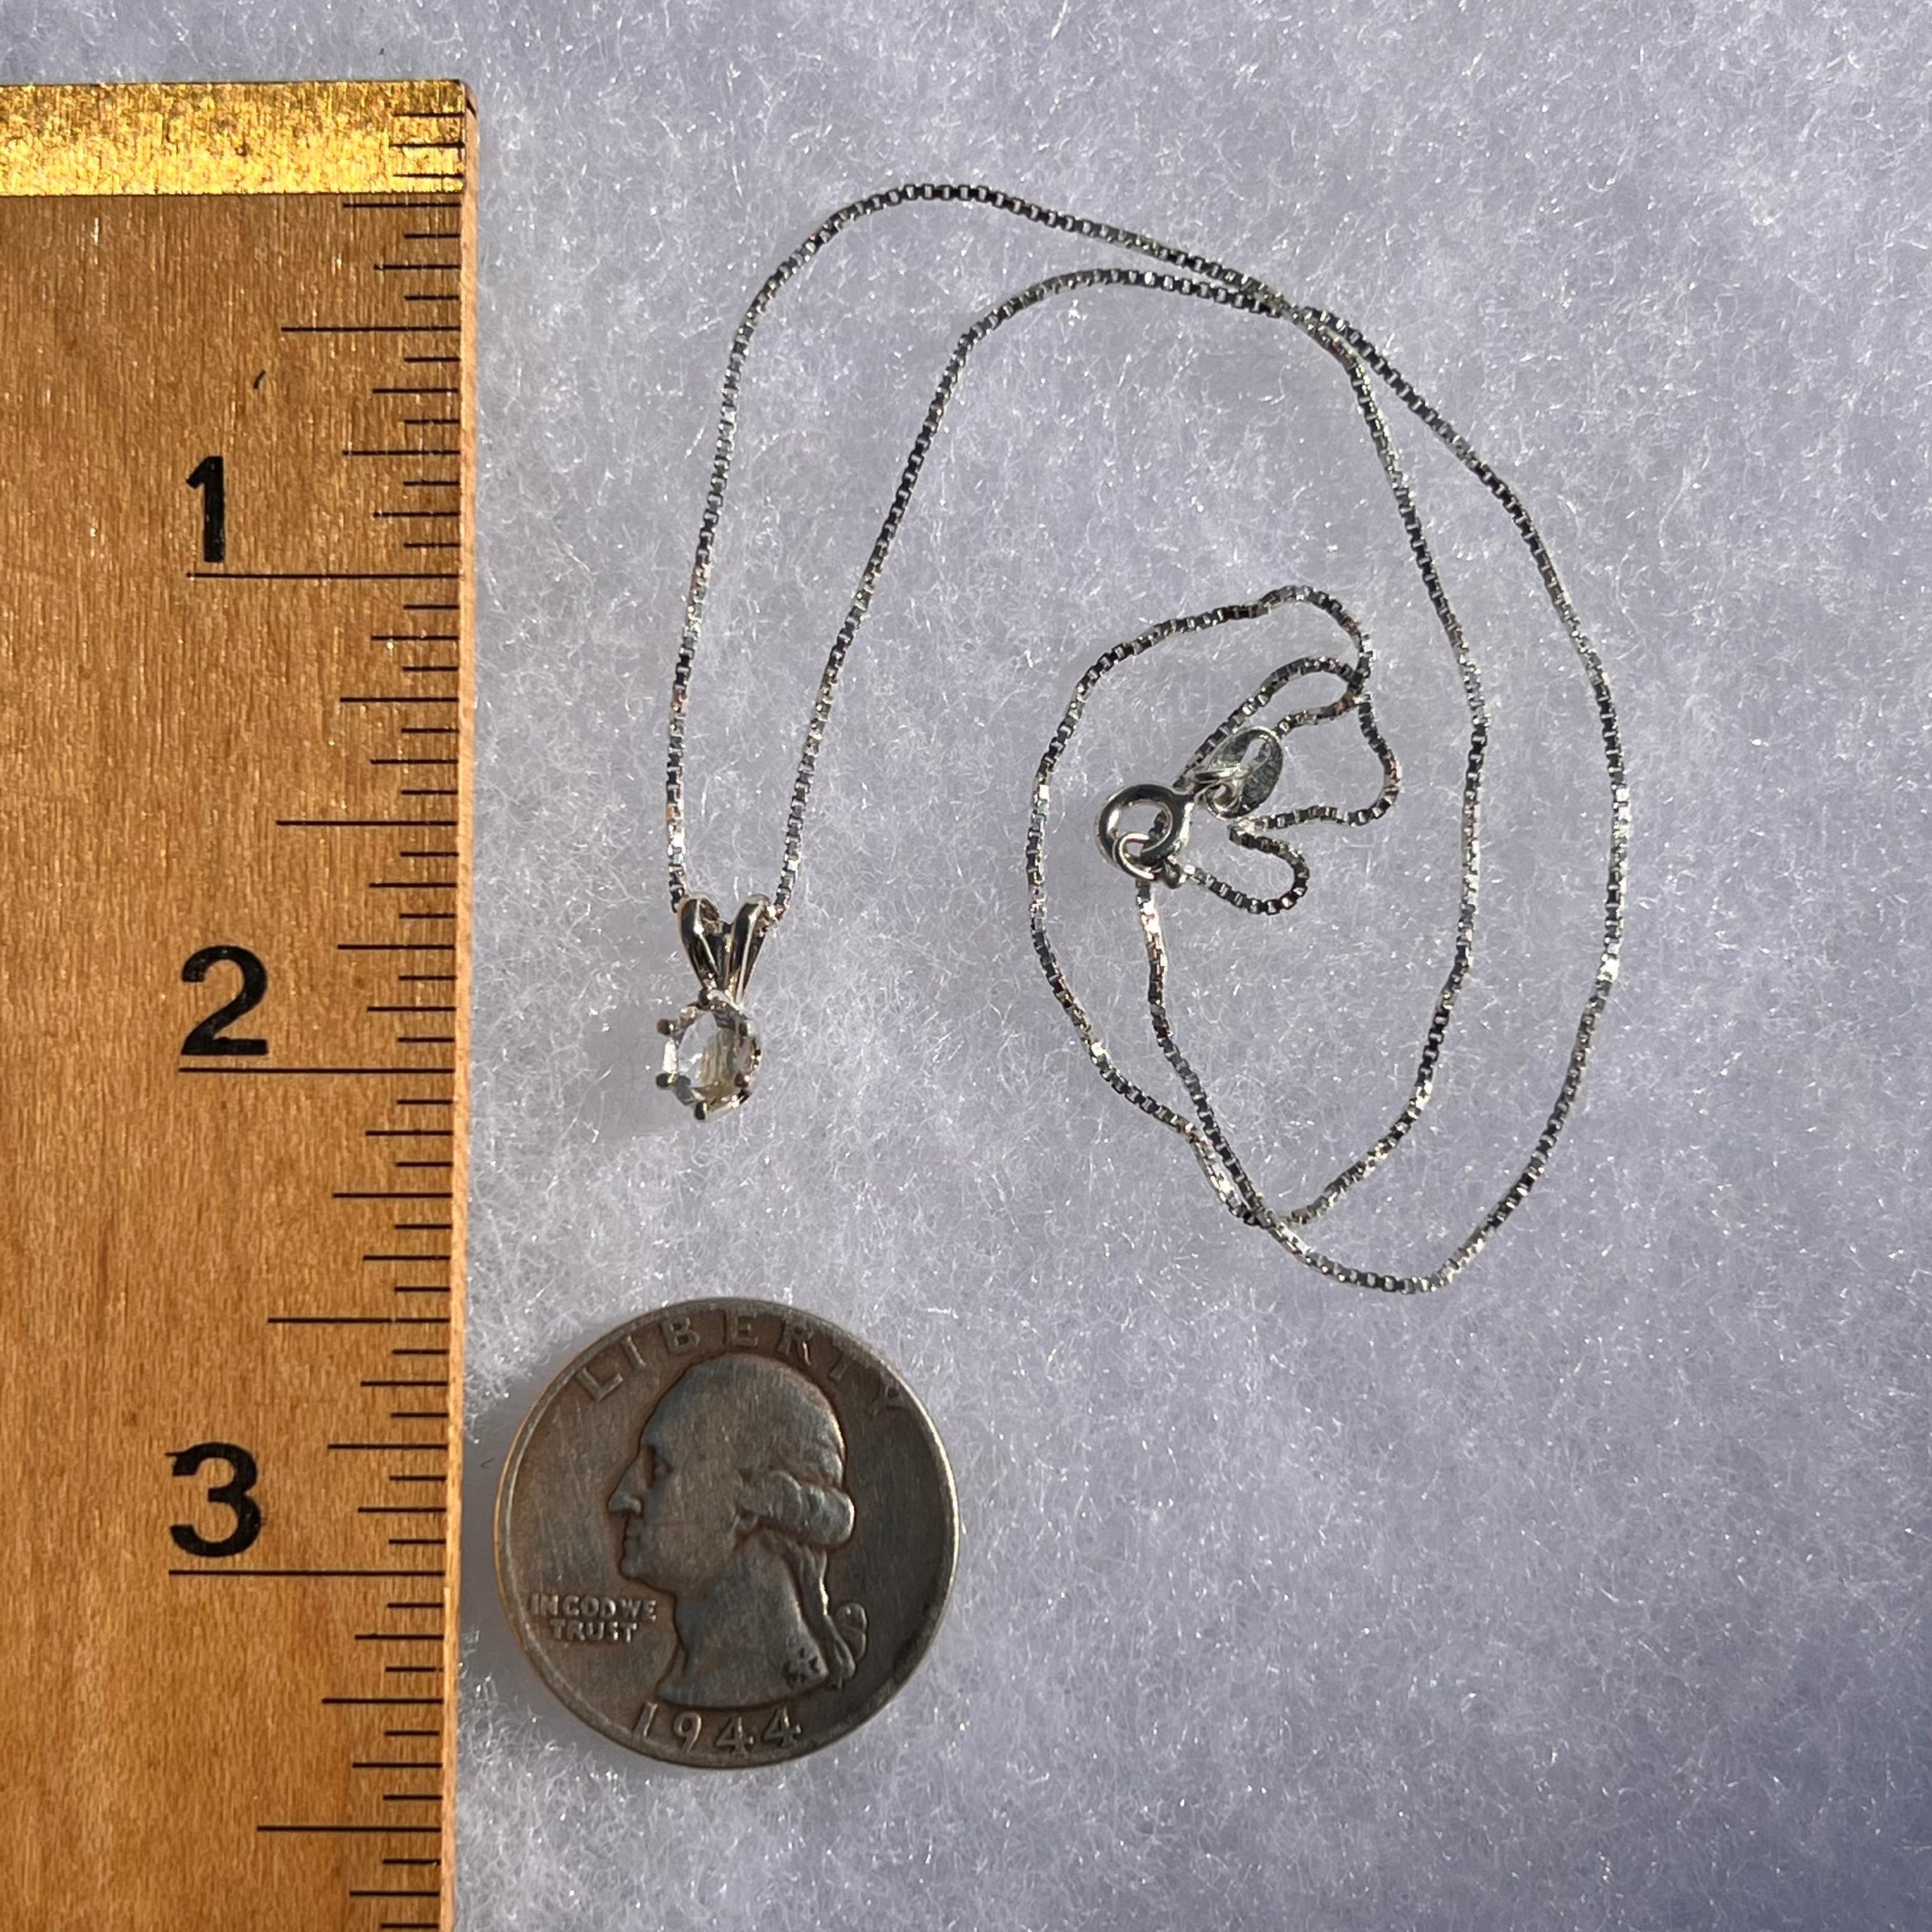 Phenacite Pendant Necklace Sterling Silver #5313-Moldavite Life